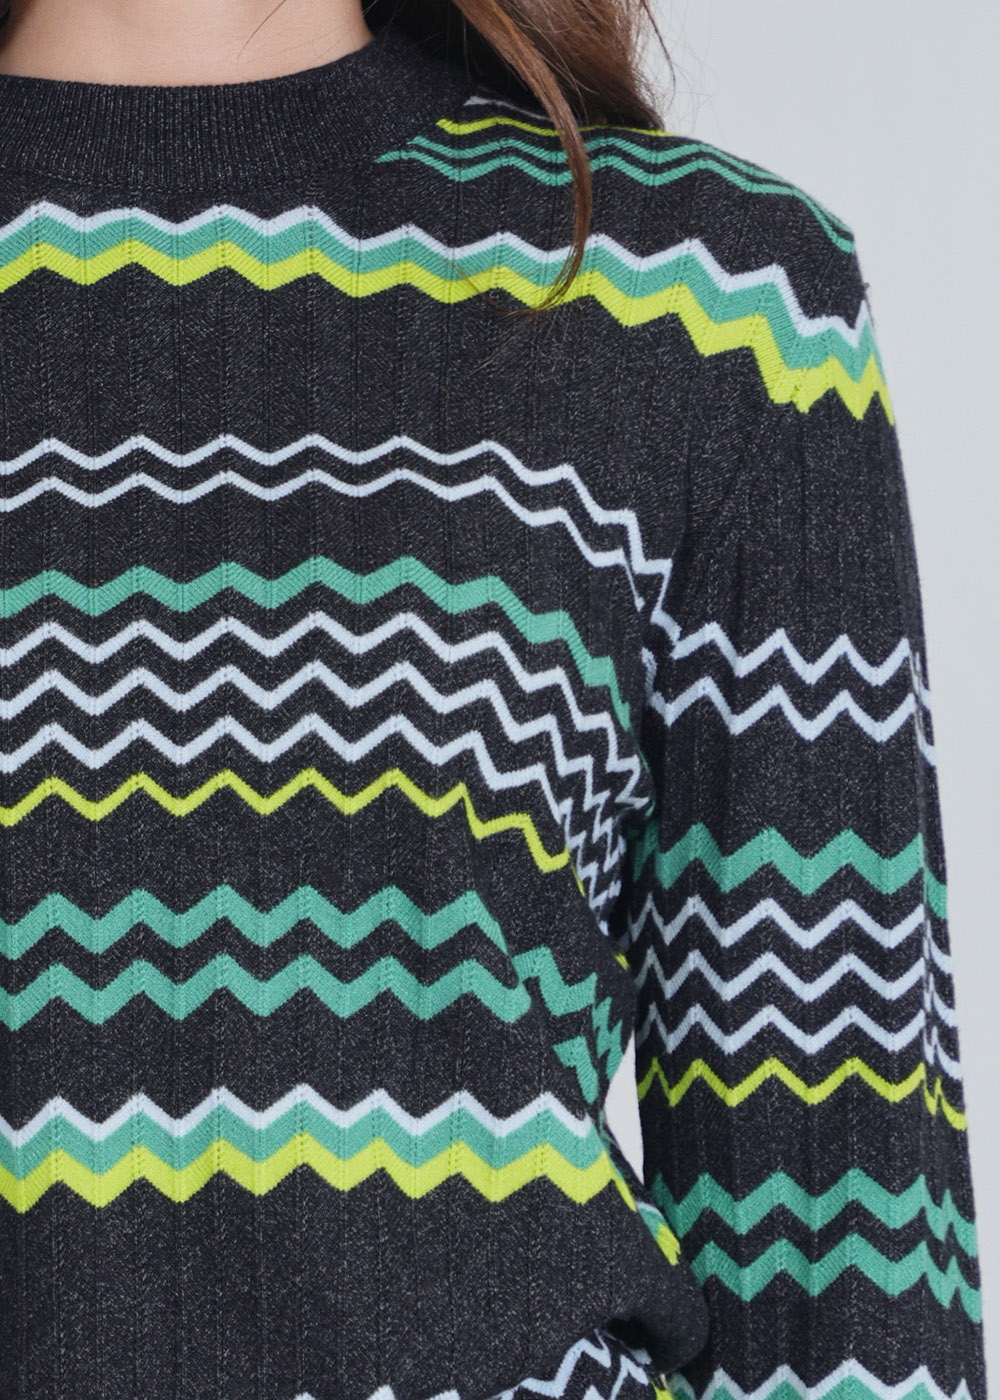 Black Sweater with Verdant Zigzag Patterning